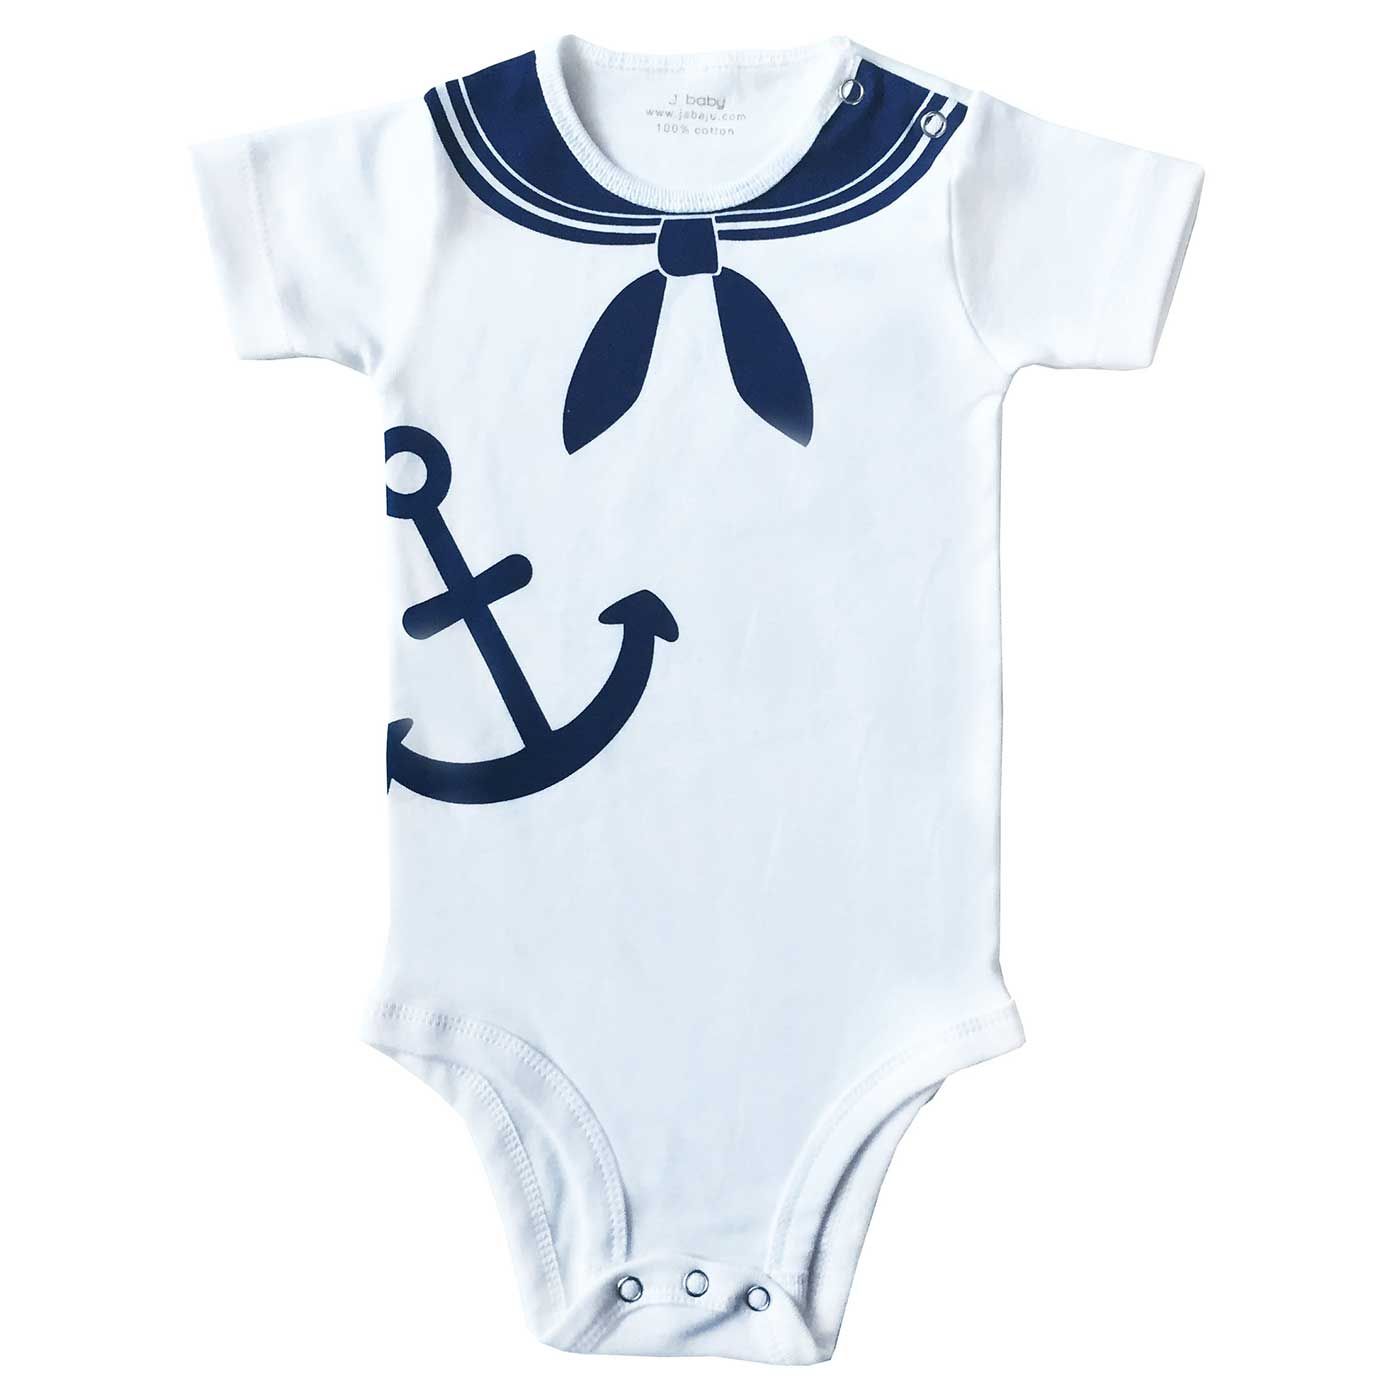 J-Baby Bodysuit Anchor Boy 3-12 month - 2